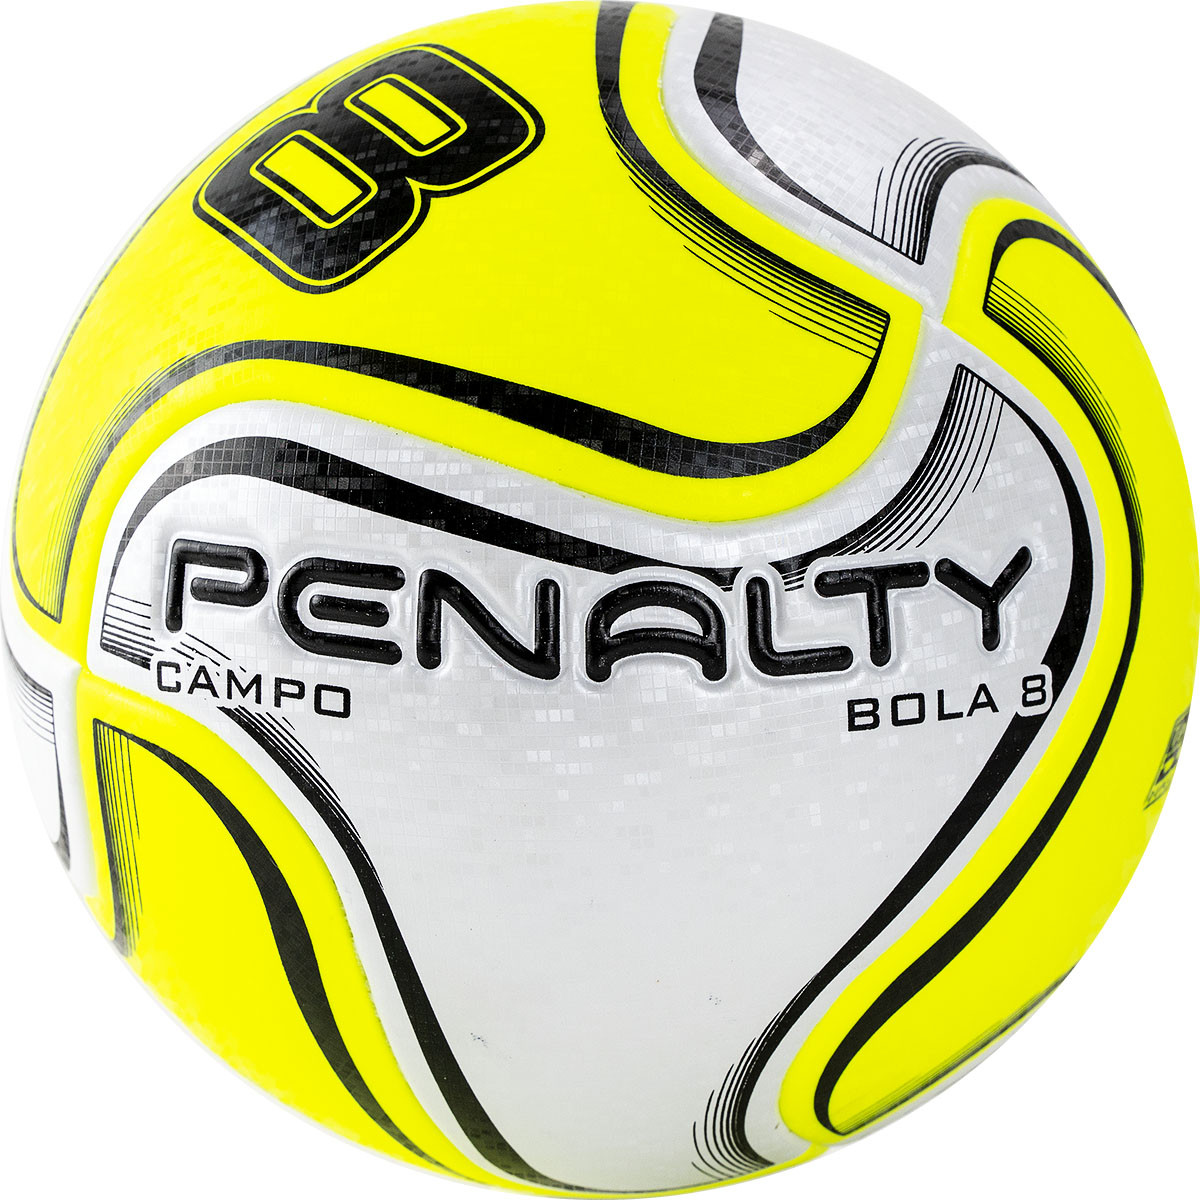 Мяч футб. PENALTY BOLA CAMPO 8 X, арт.5212851880-U, р.5, PU, термосшивка, бел-желт